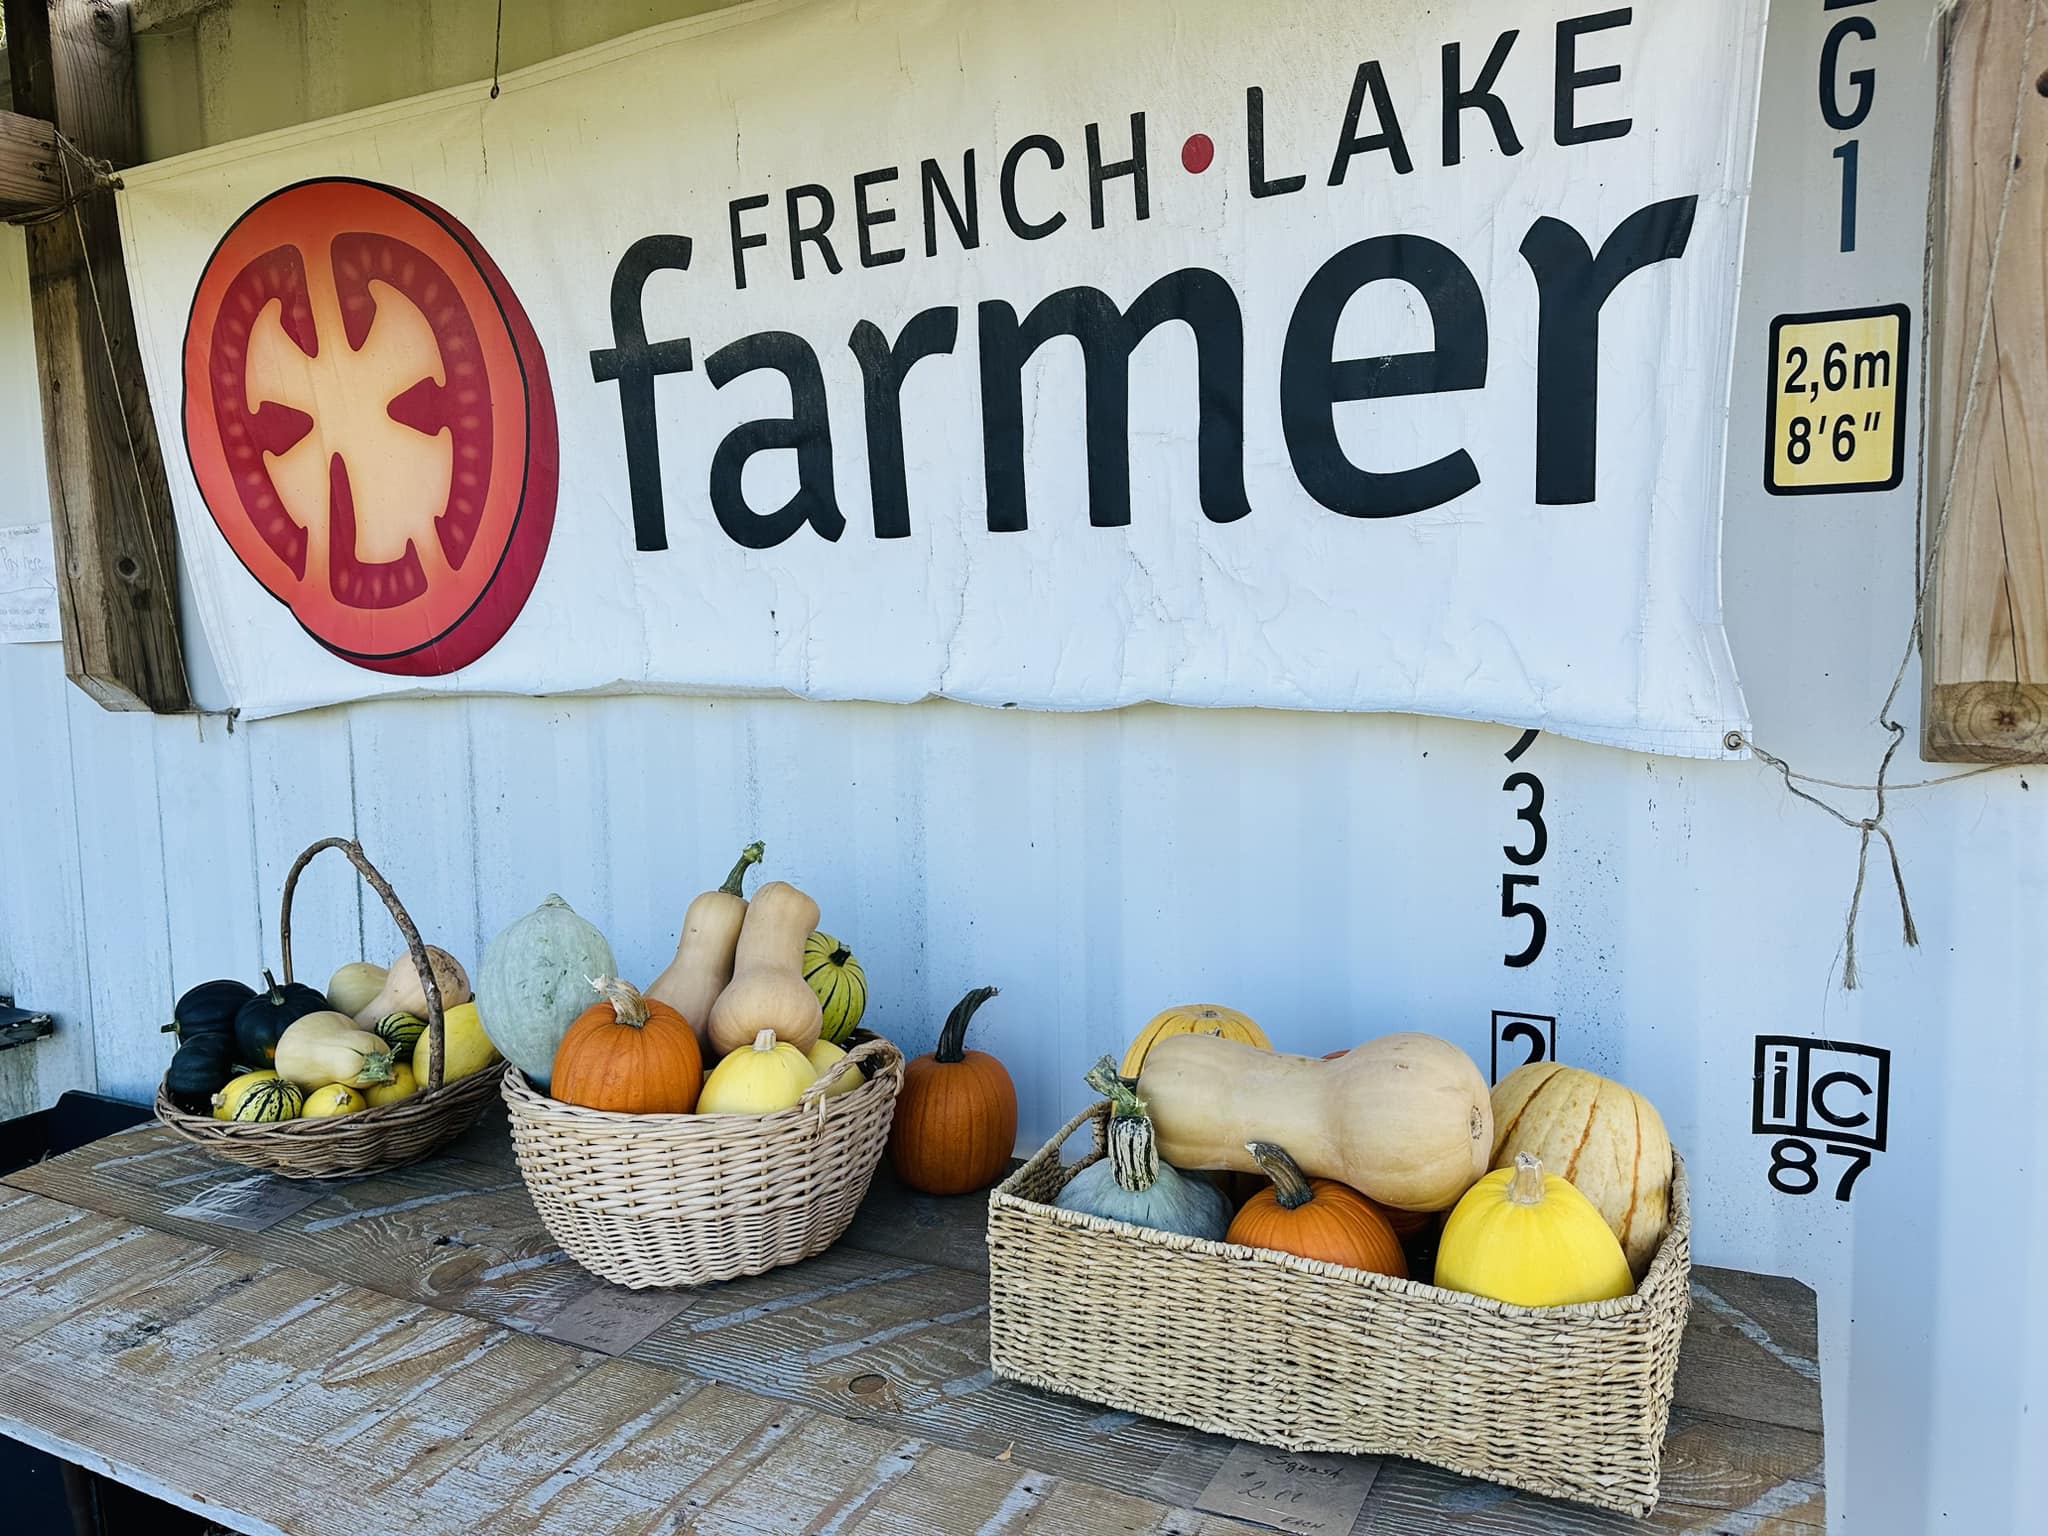 French Lake Farmer 15953 47th St NW, Annandale Minnesota 55302